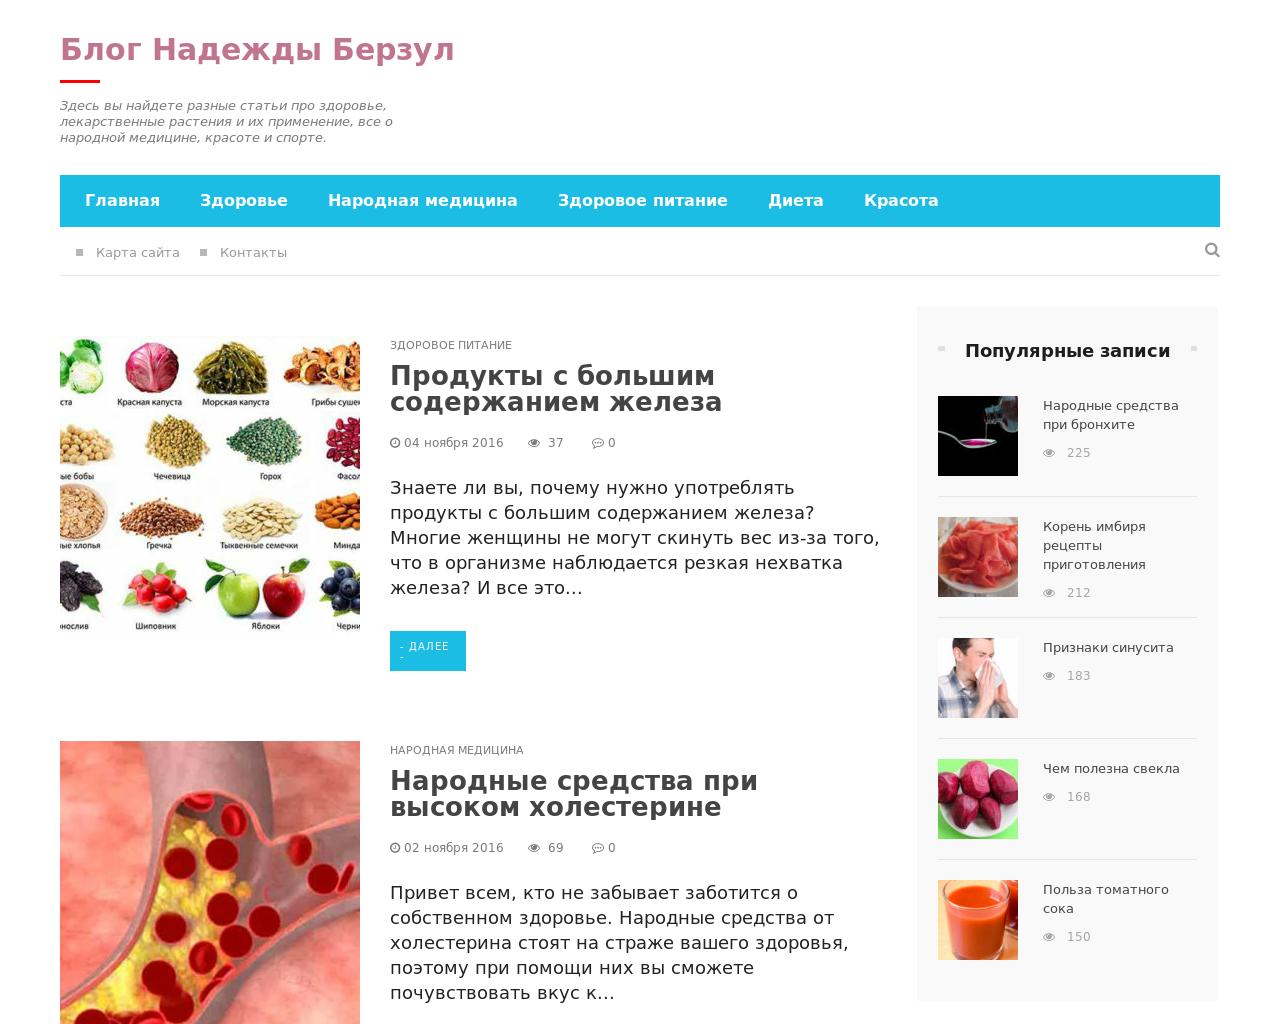 Изображение сайта heart-health.ru в разрешении 1280x1024